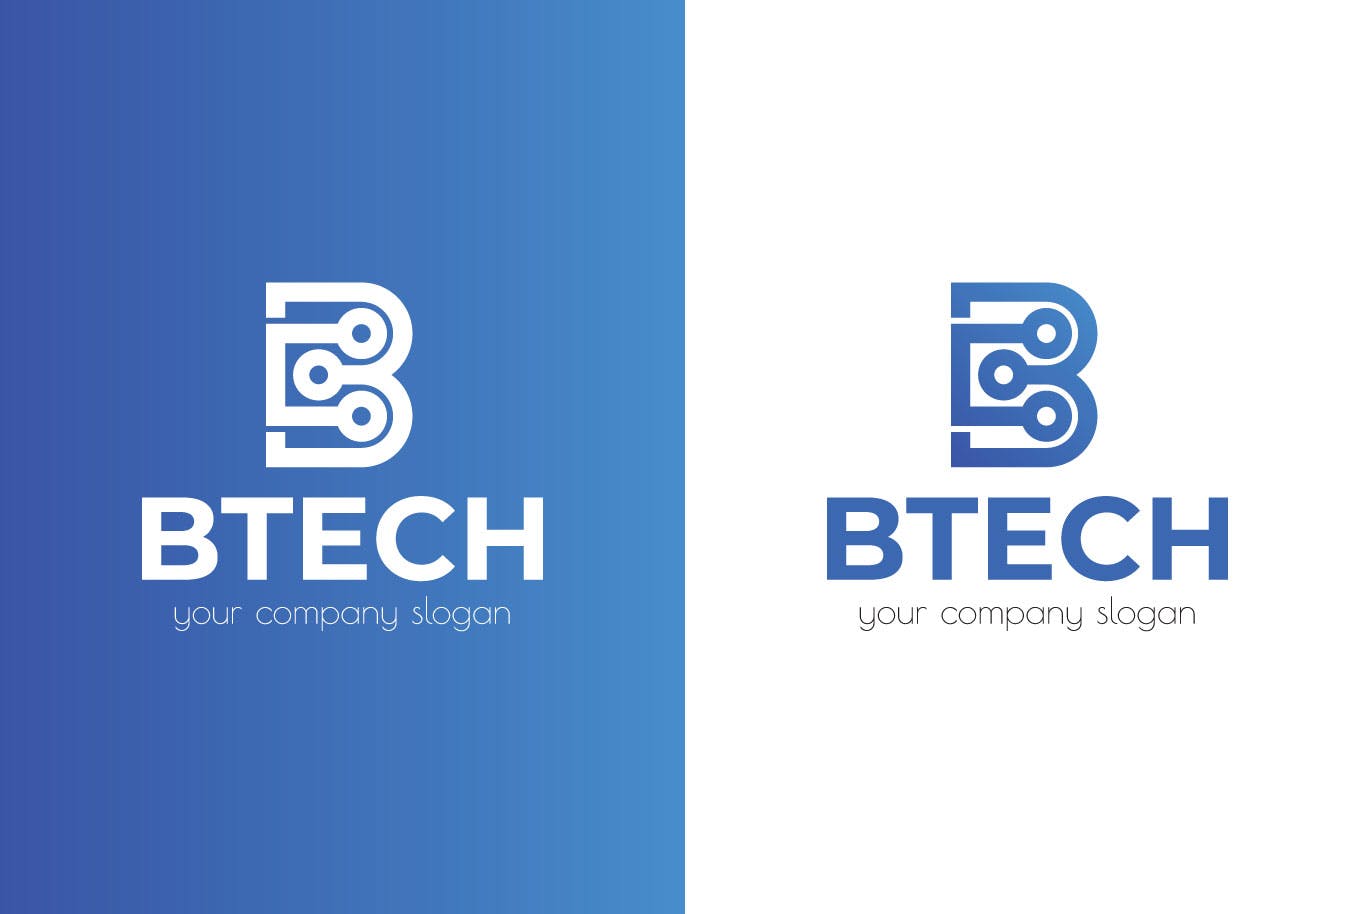 基于B字母图形的企业Logo设计16设计网精选模板 Letter Based Business Logo Template插图(1)